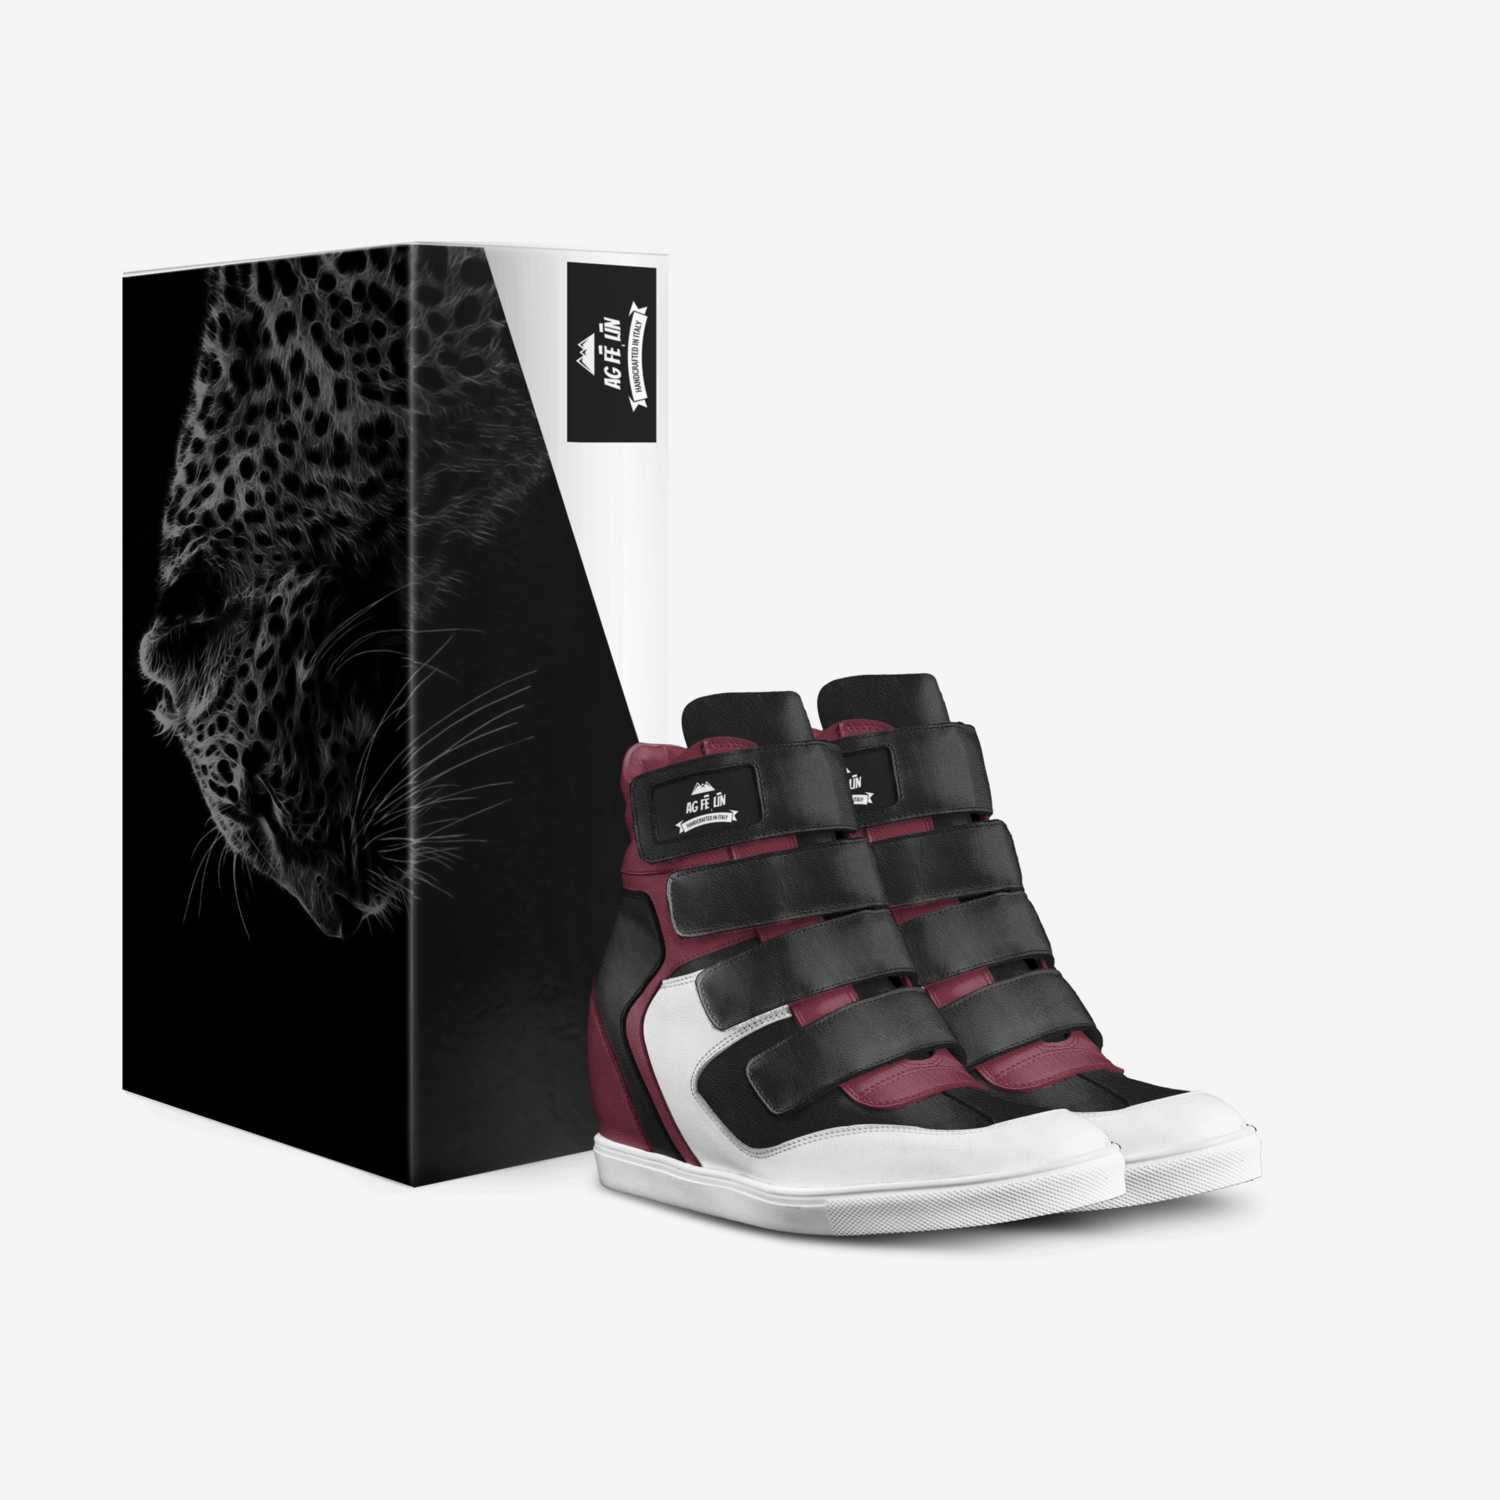 AG Fēˌlīn custom made in Italy shoes by Daniel Brown | Box view